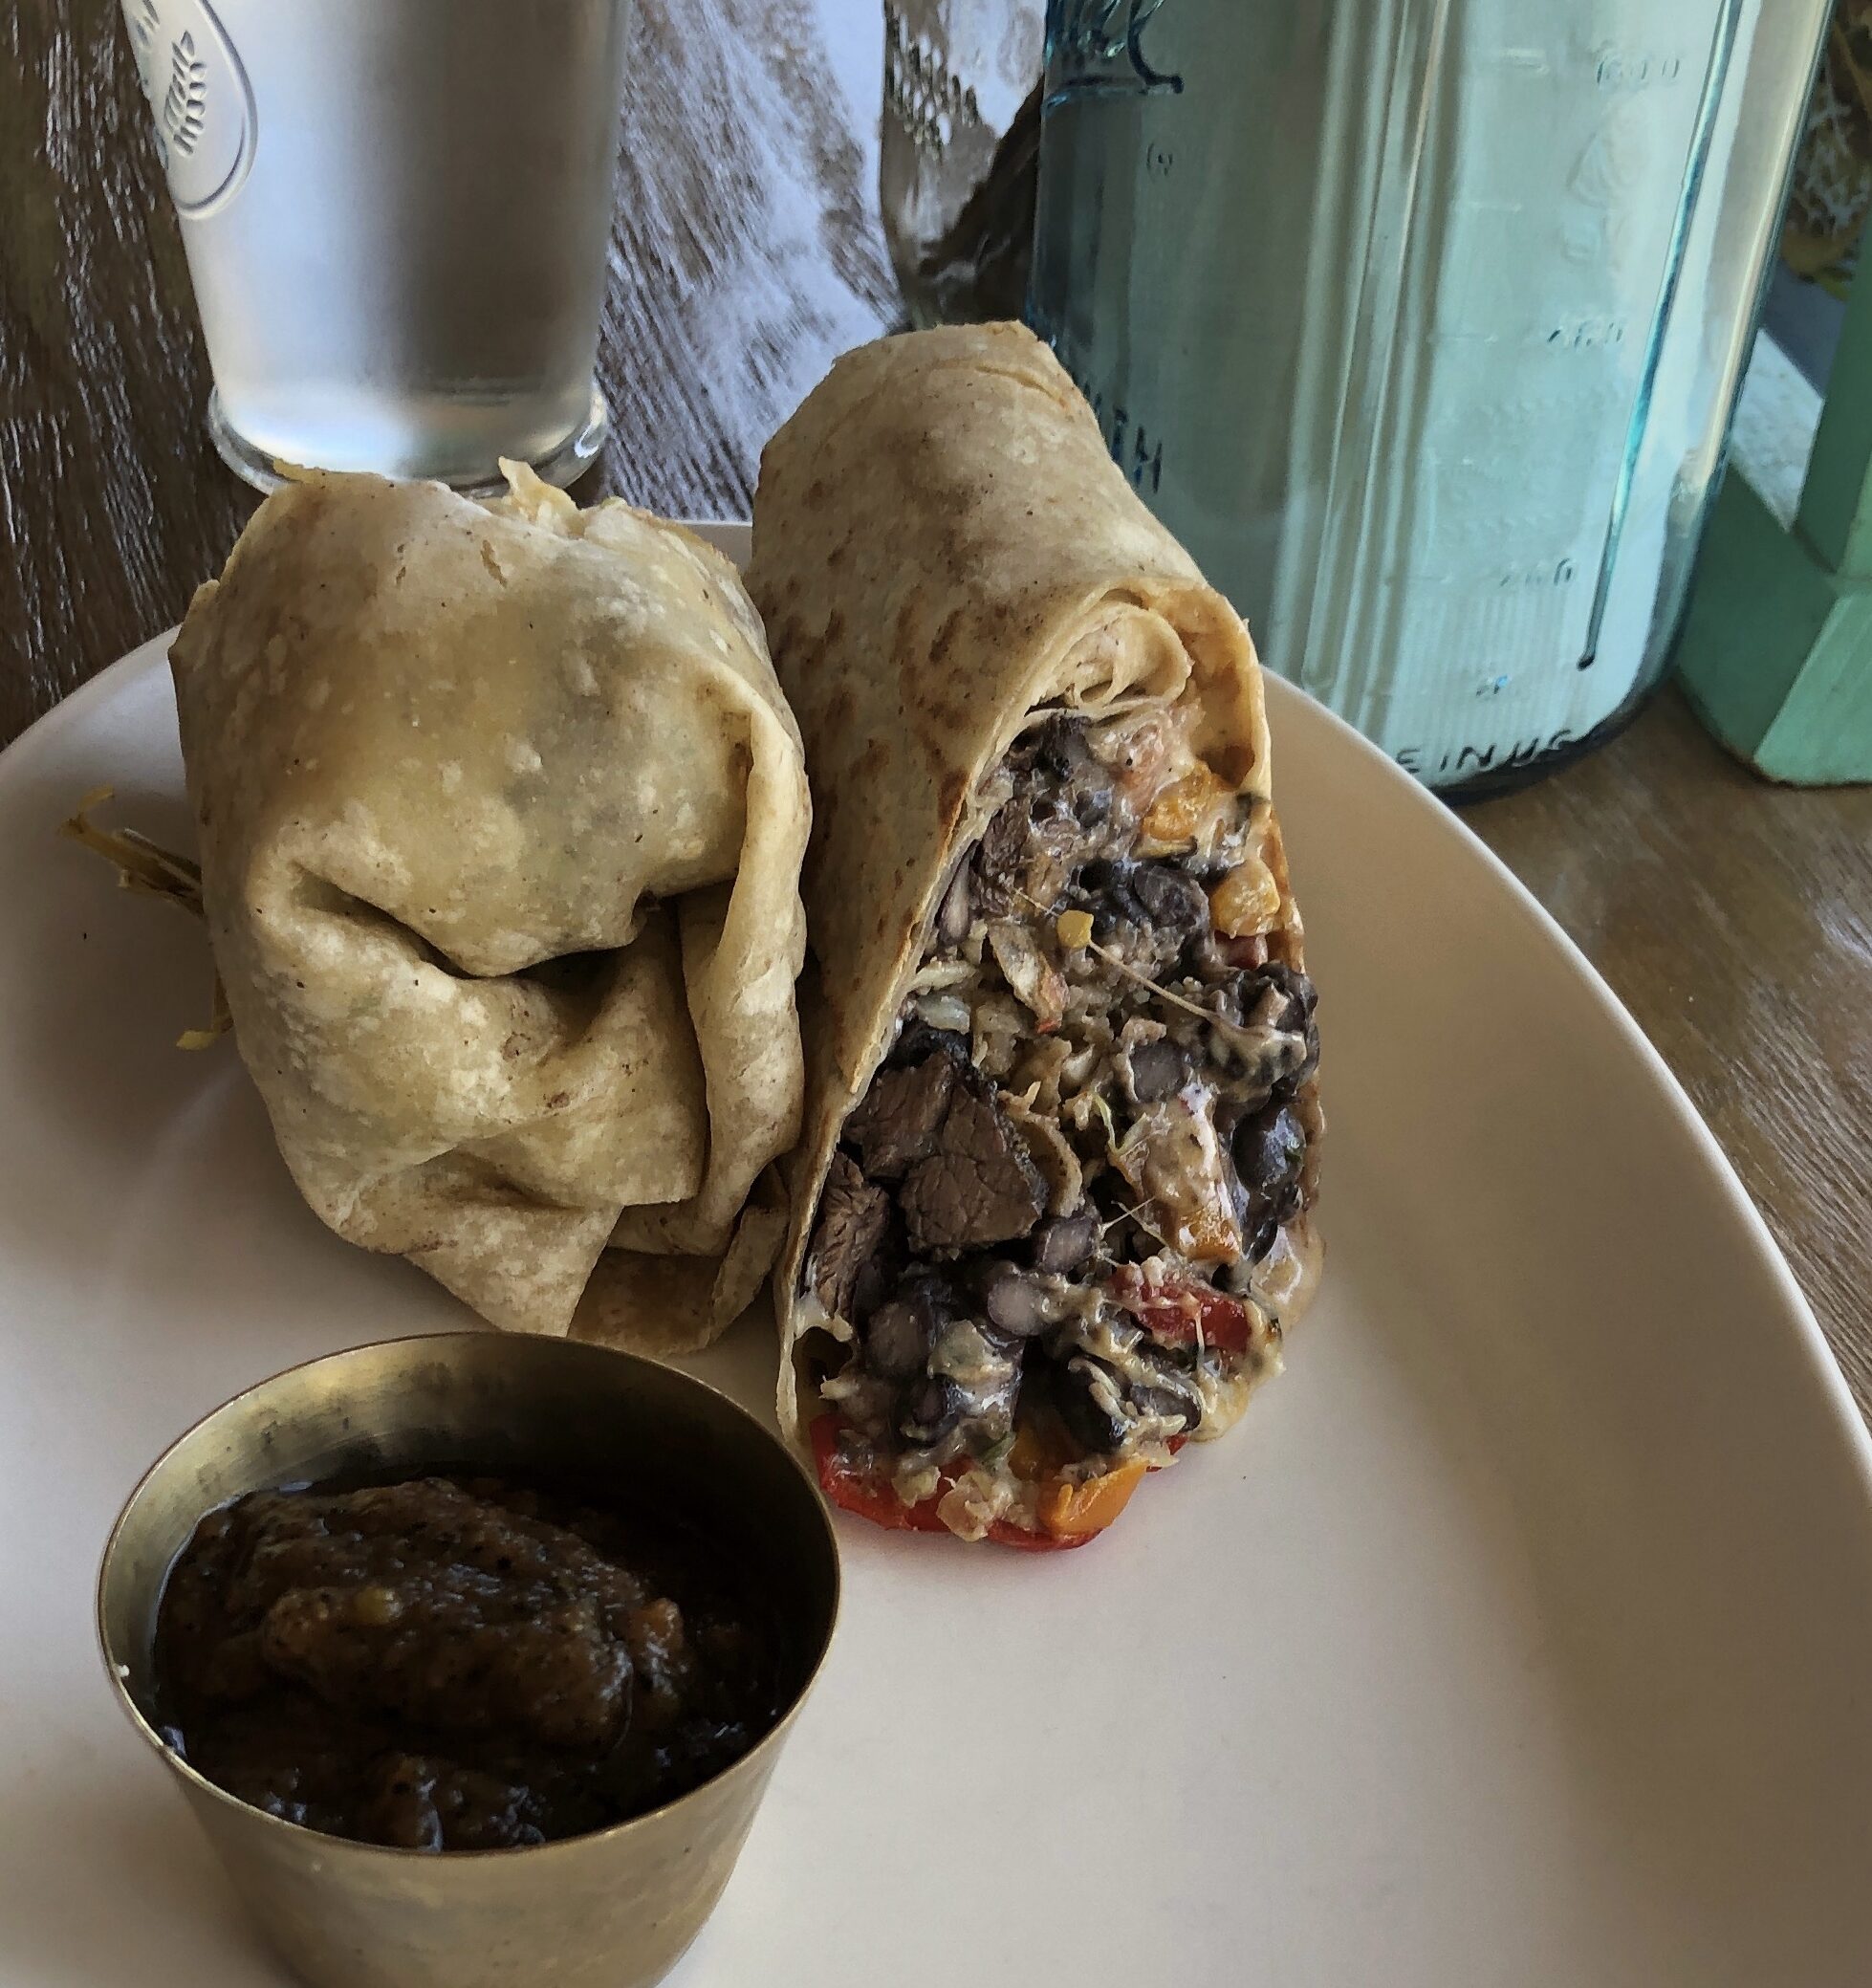 Gluten Free Burrito in San Diego